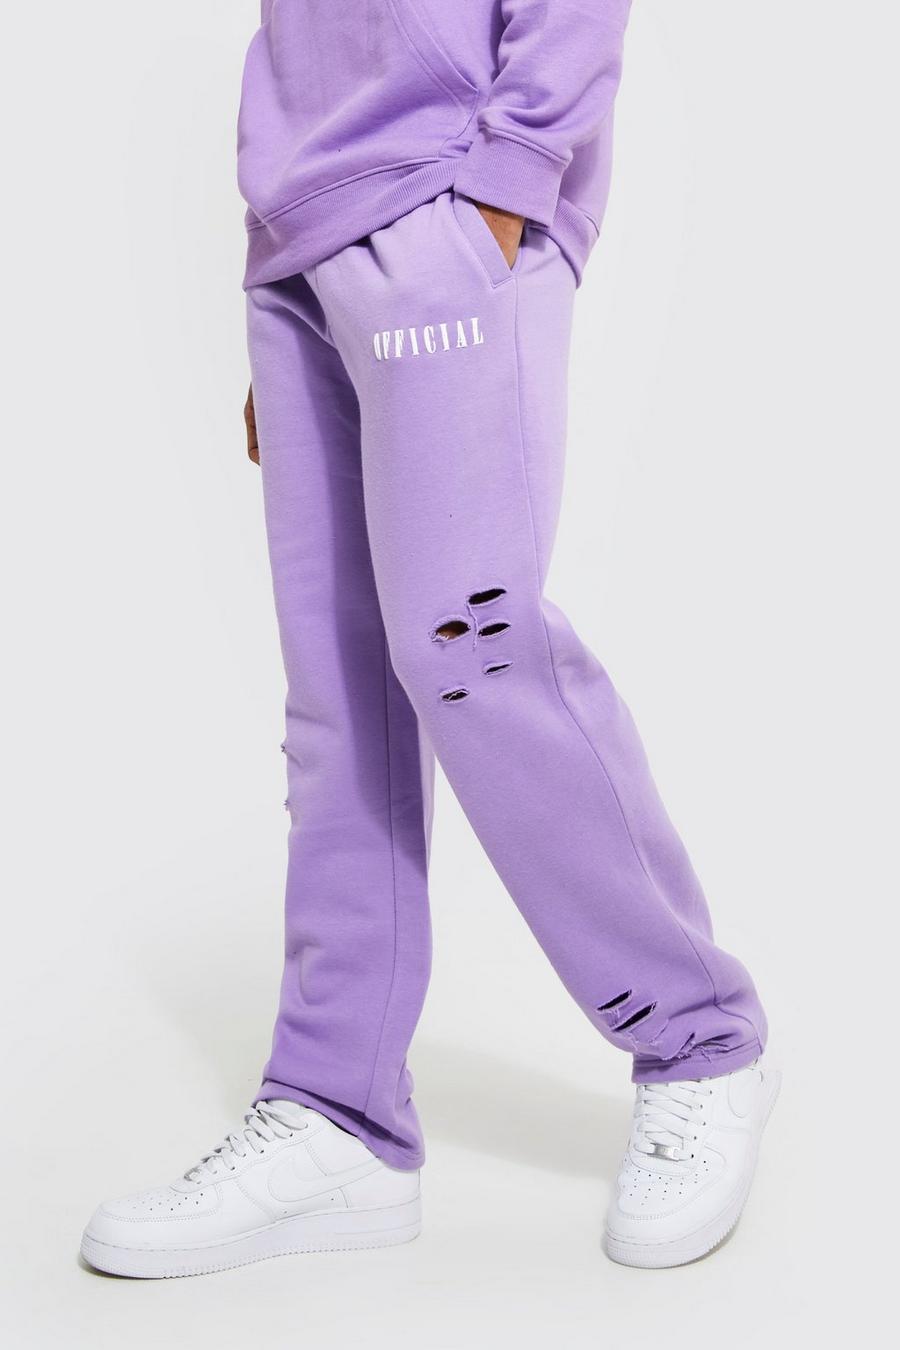 Zerrissene Oversize Official Jogginghose mit weitem Bein, Lilac purple